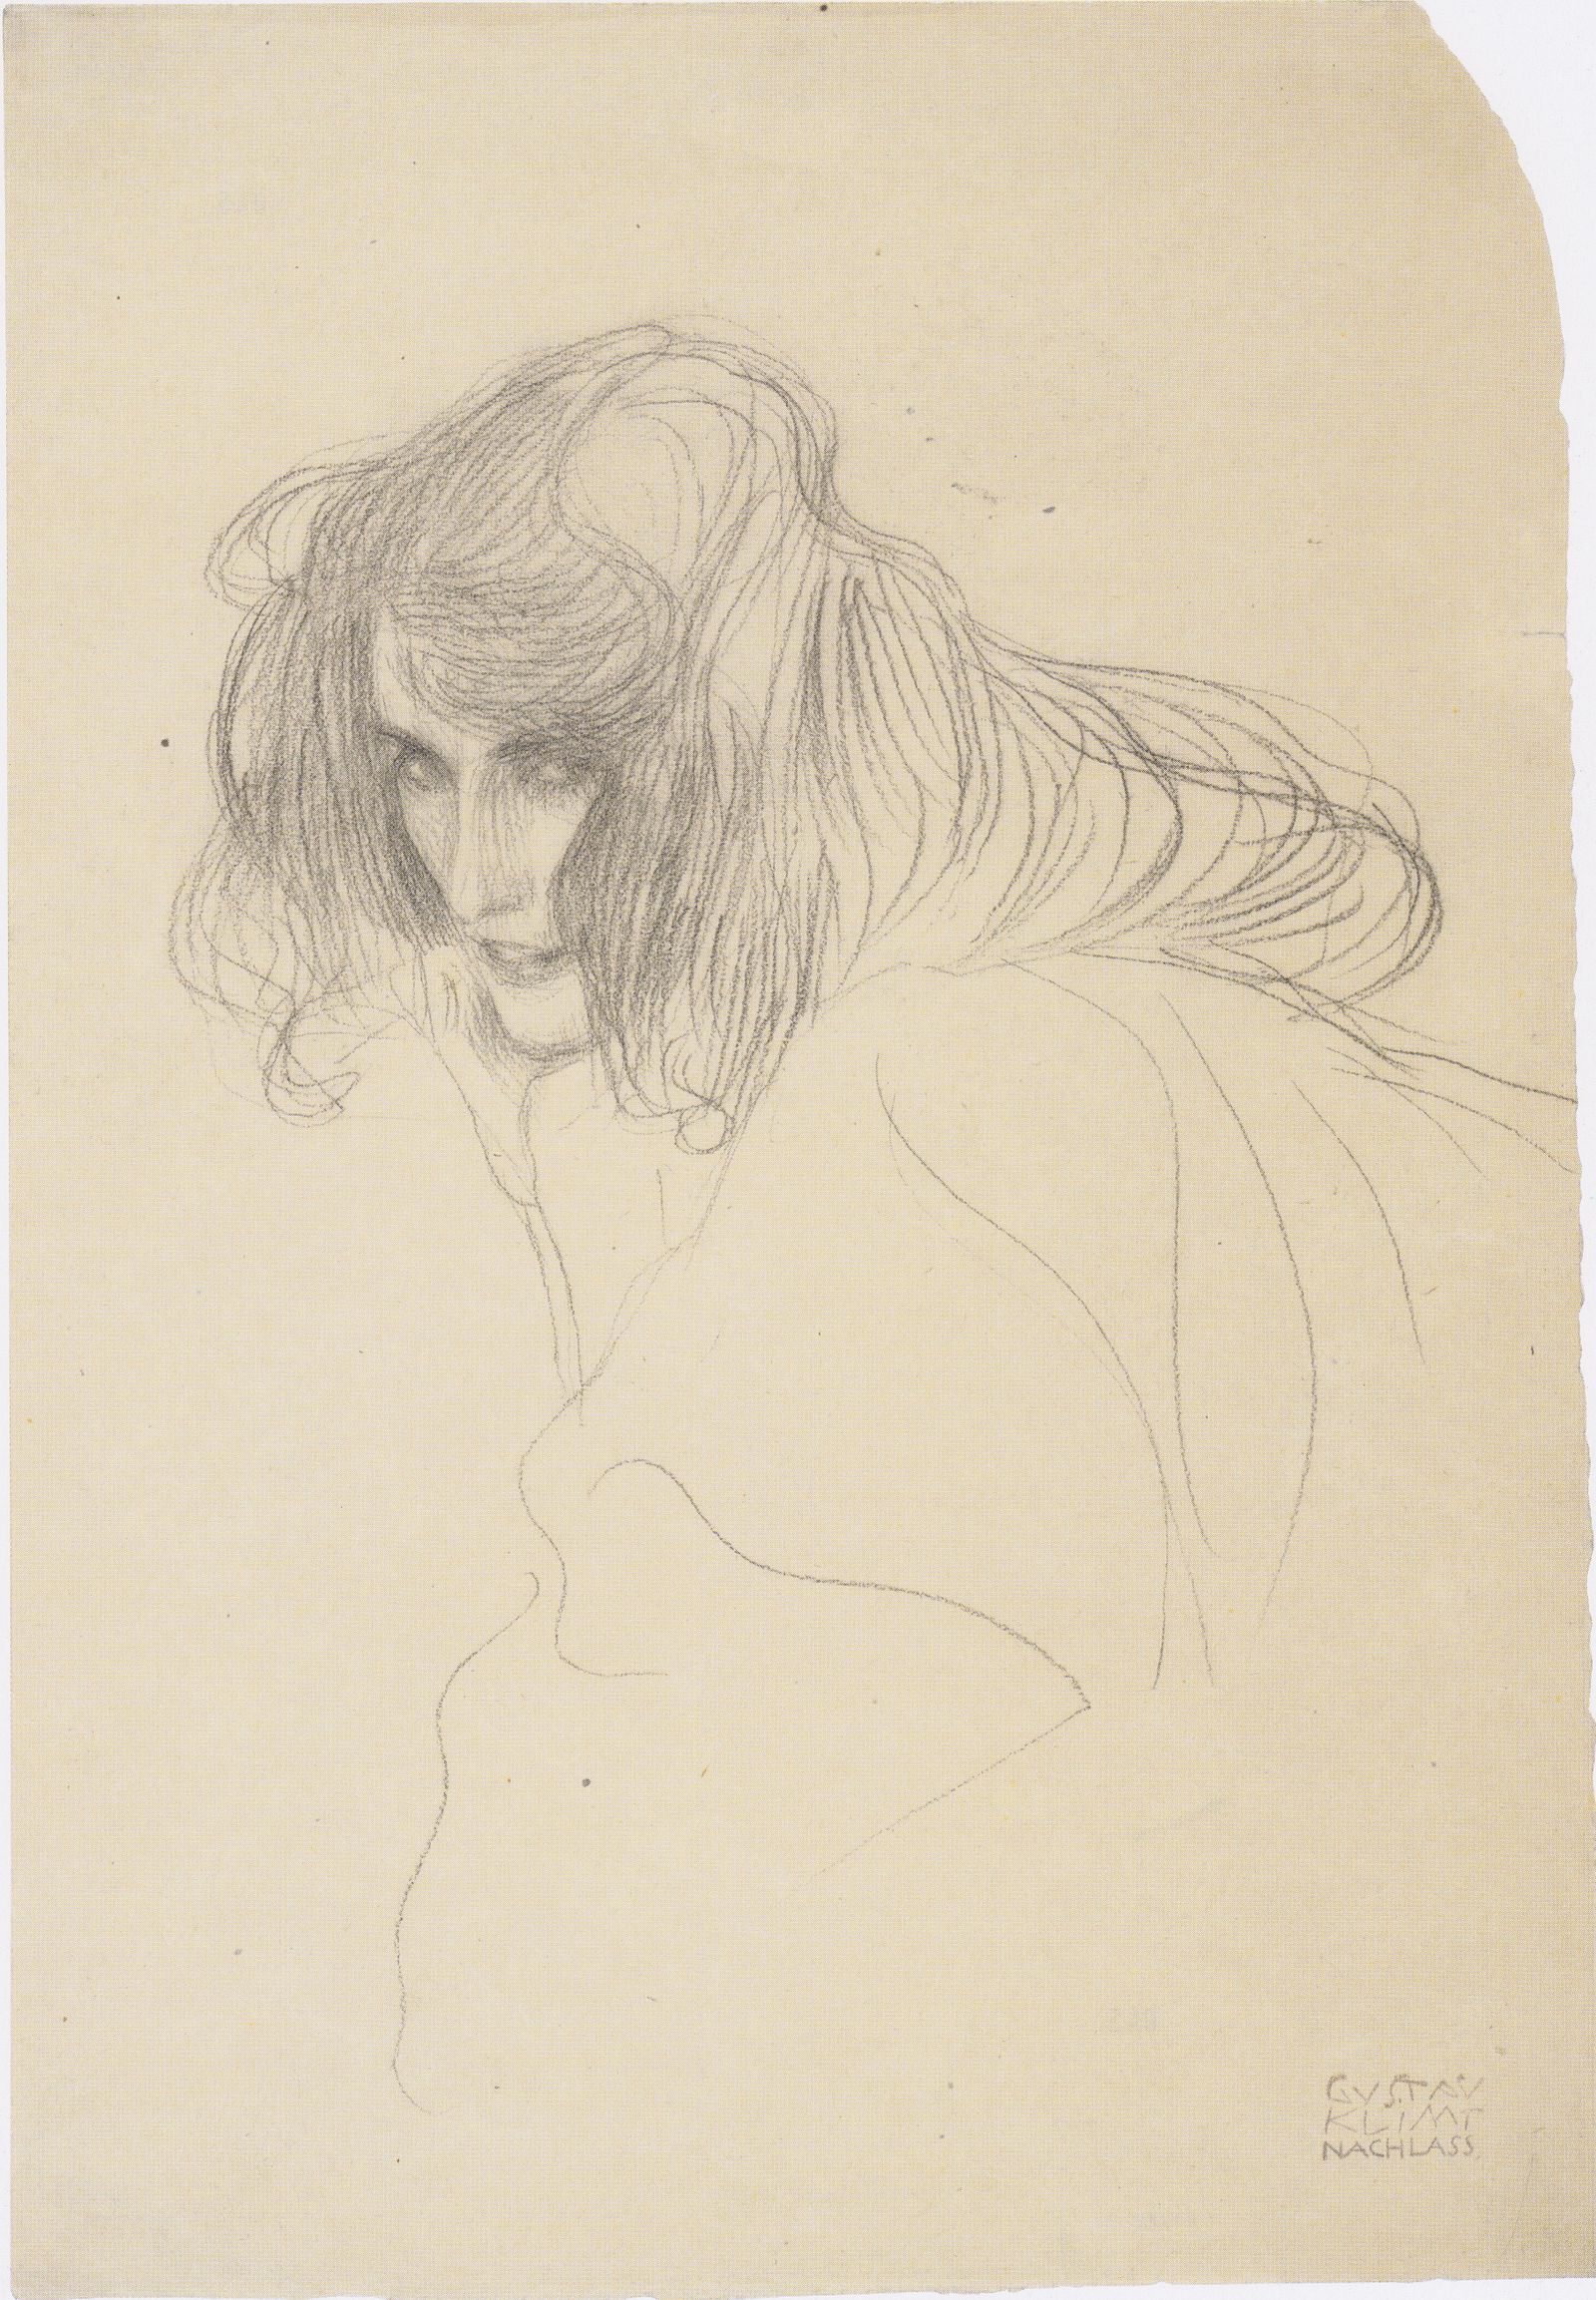 Pencil sketch by Klimpt of a woman's three-quarter profile